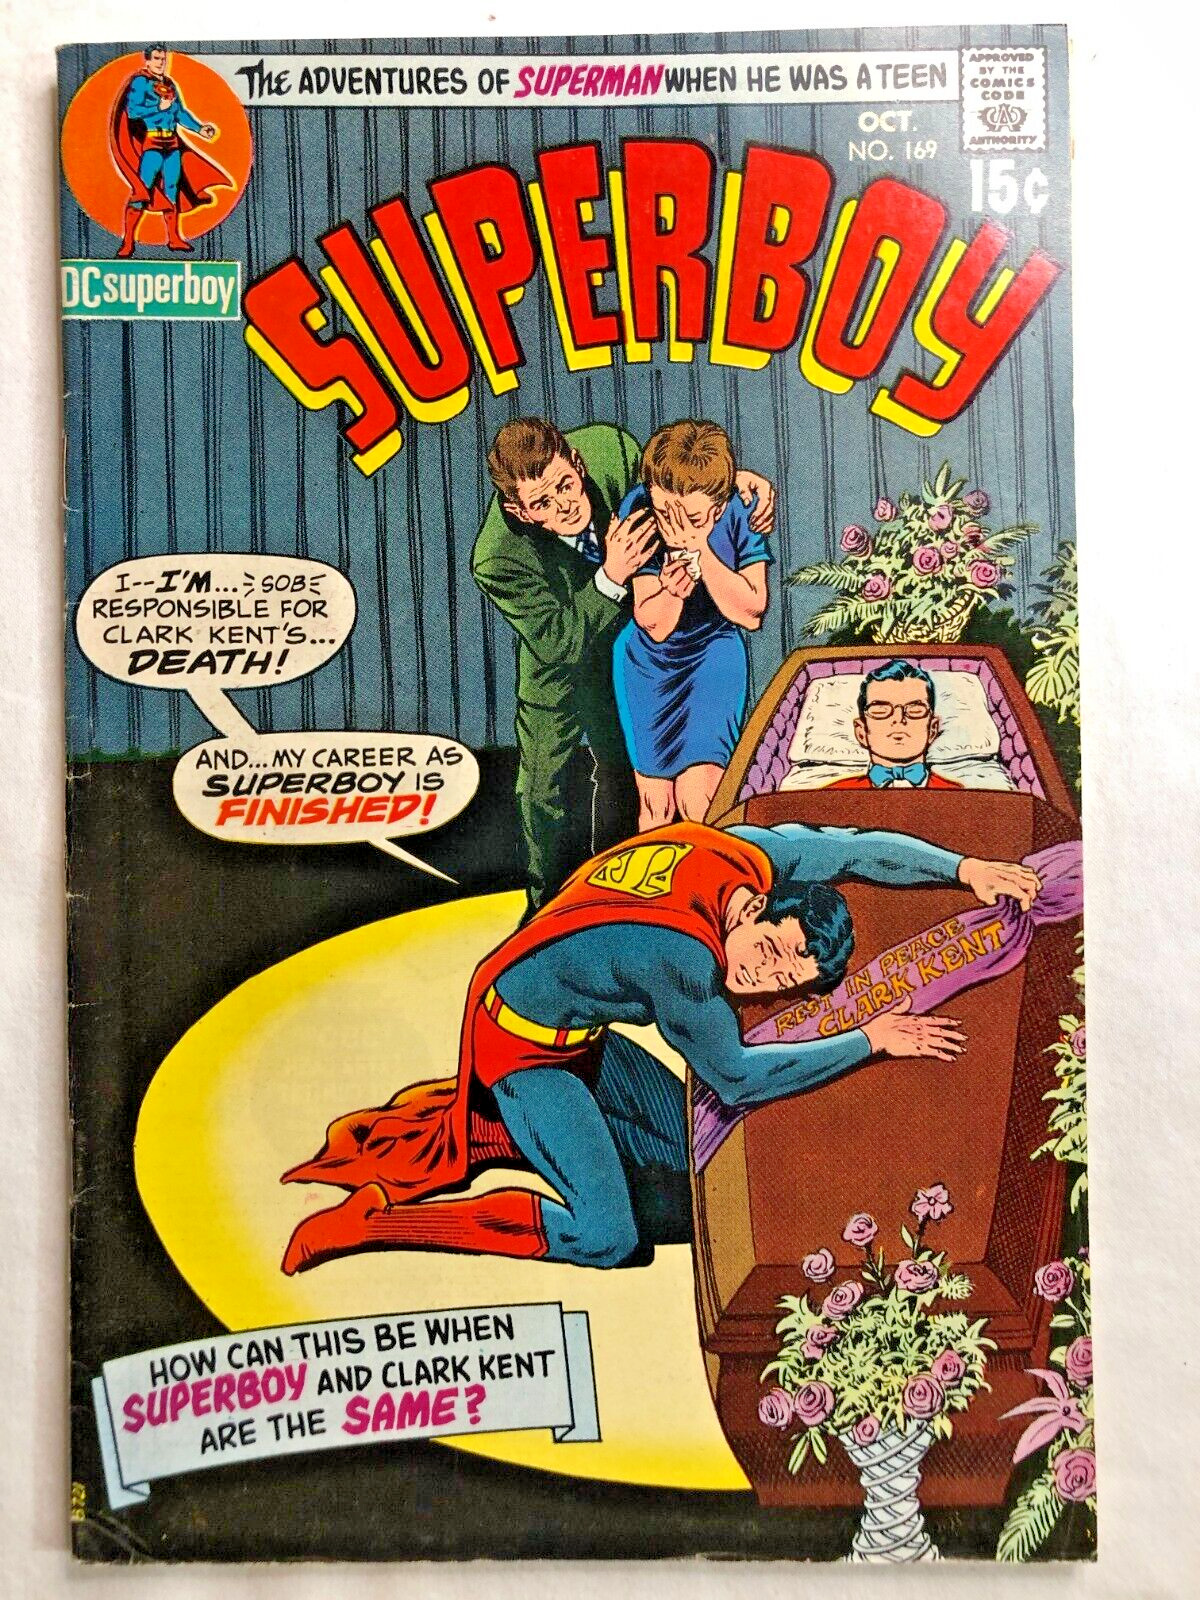 SUPERBOY #169 October 1970 Vintage Silver Age DC Comics Nice Condition